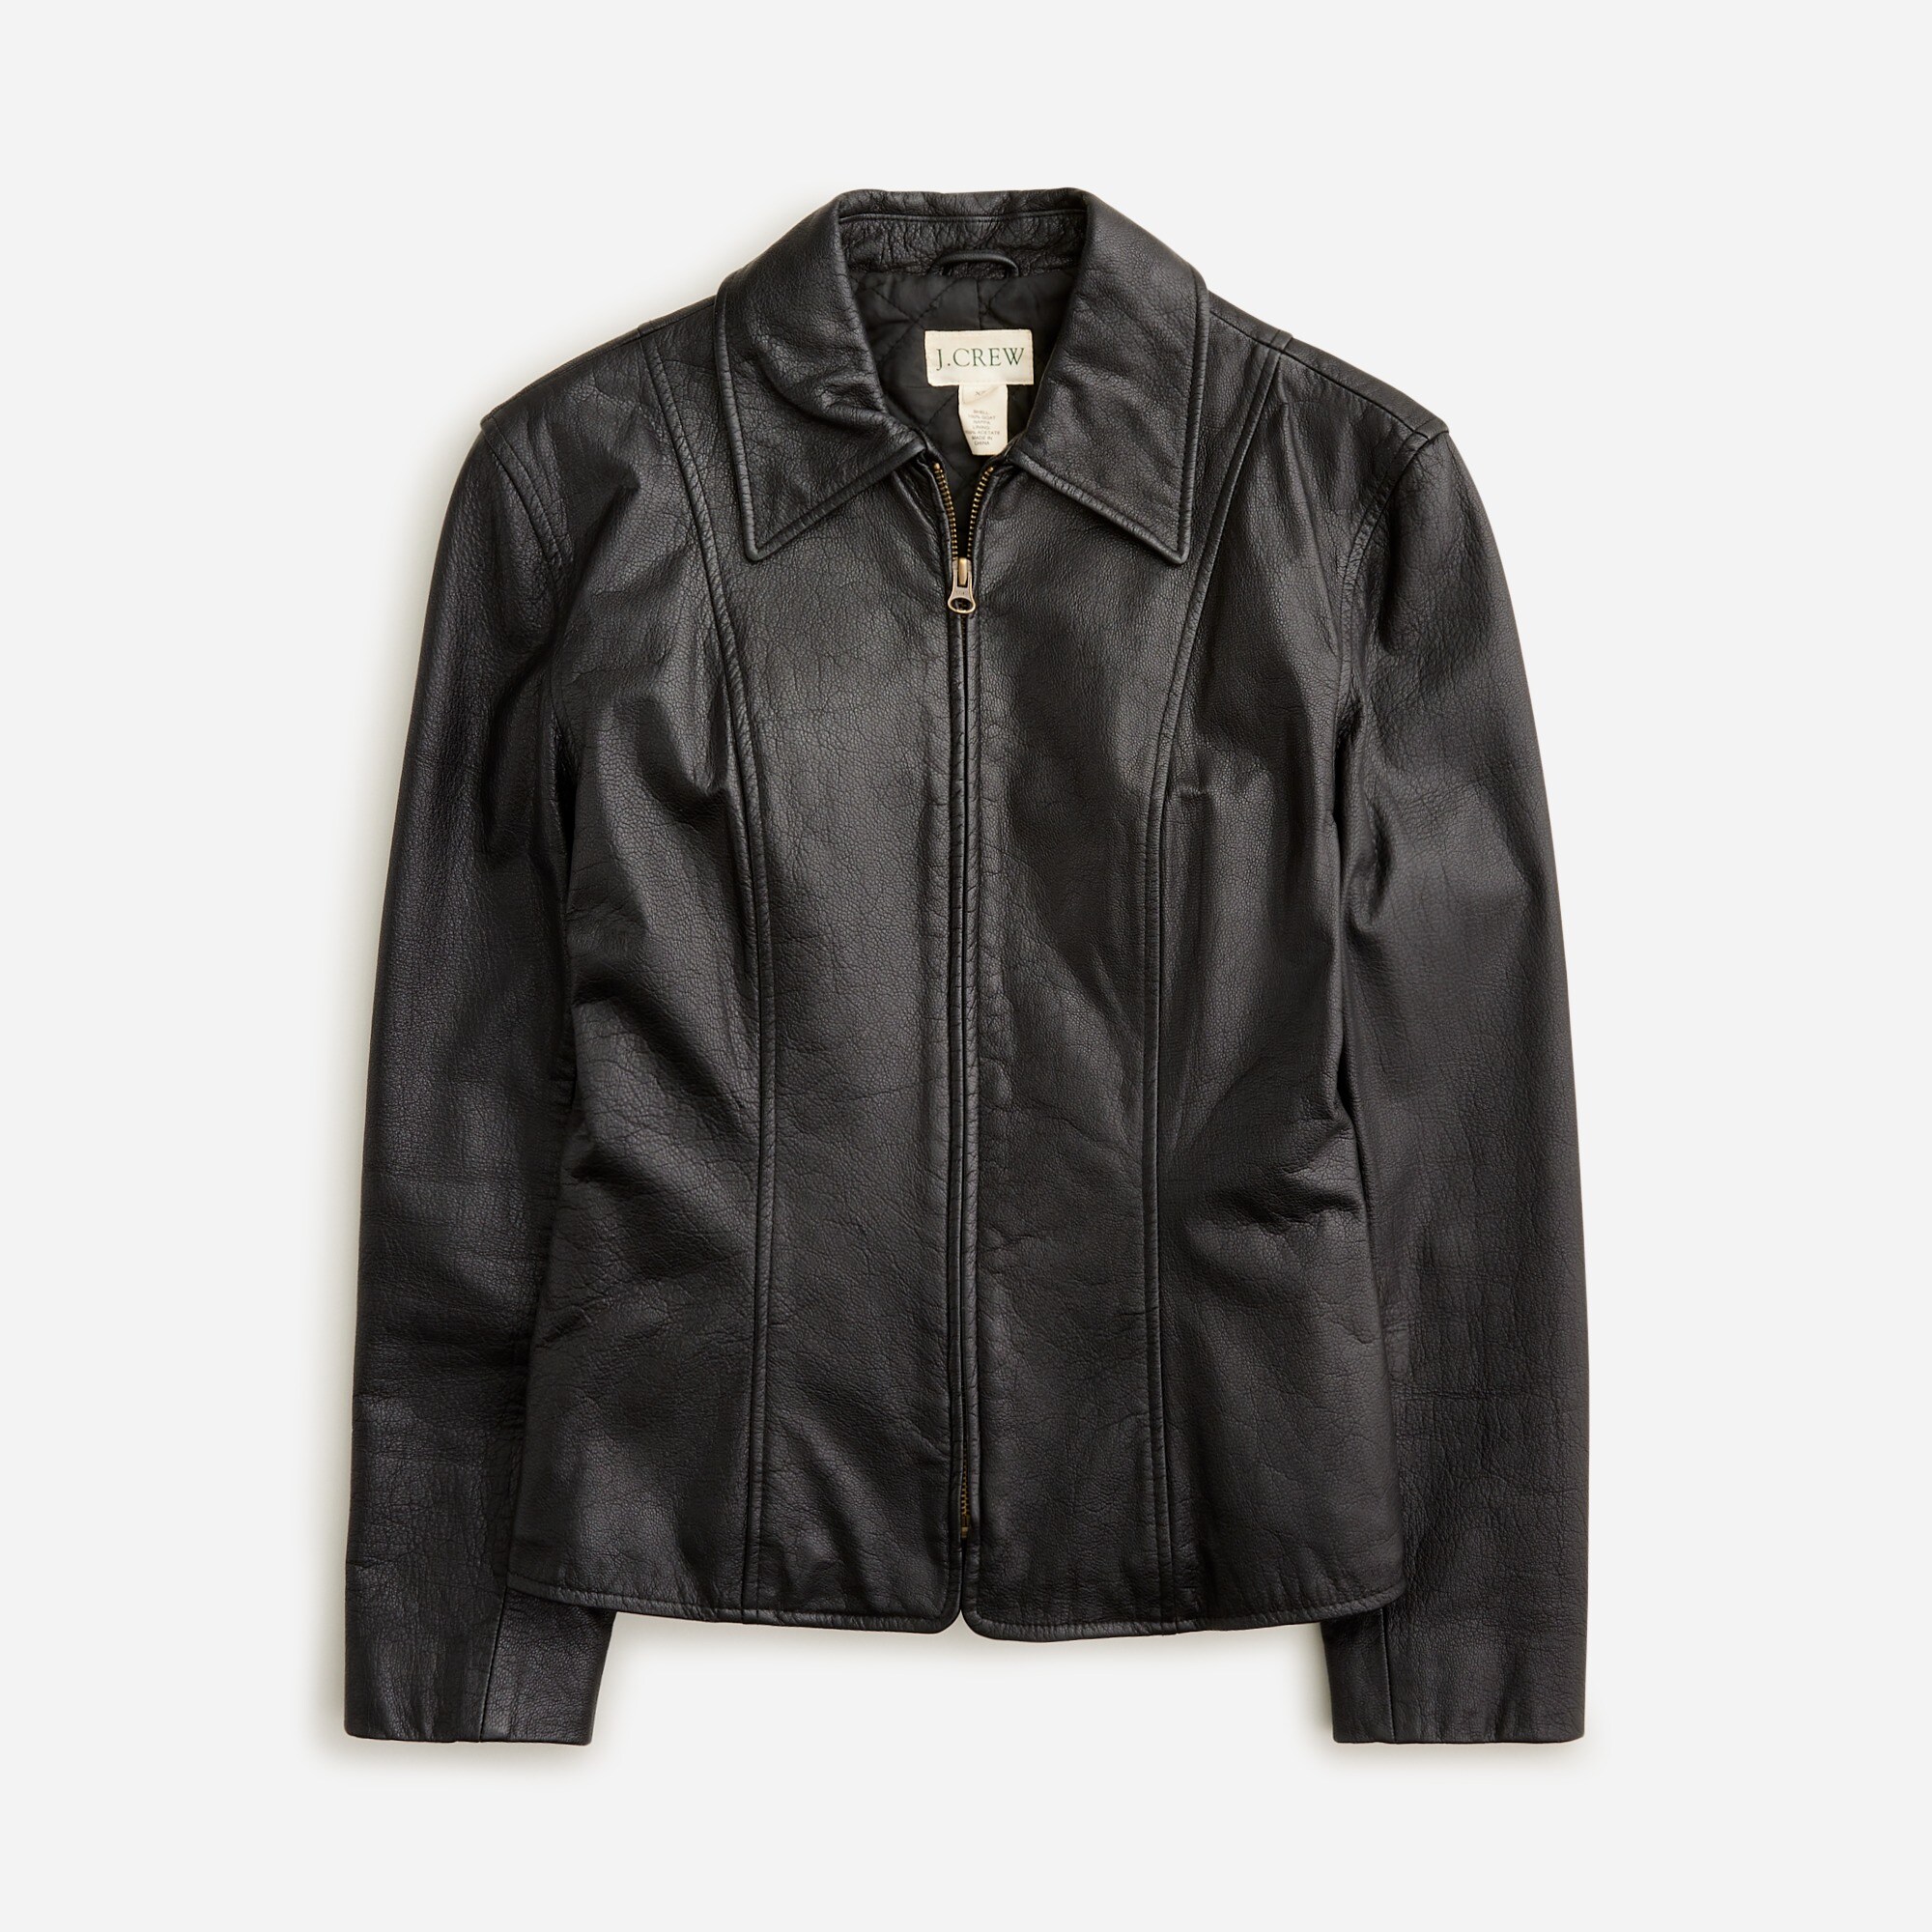  Vintage J.Crew '90s leather jacket